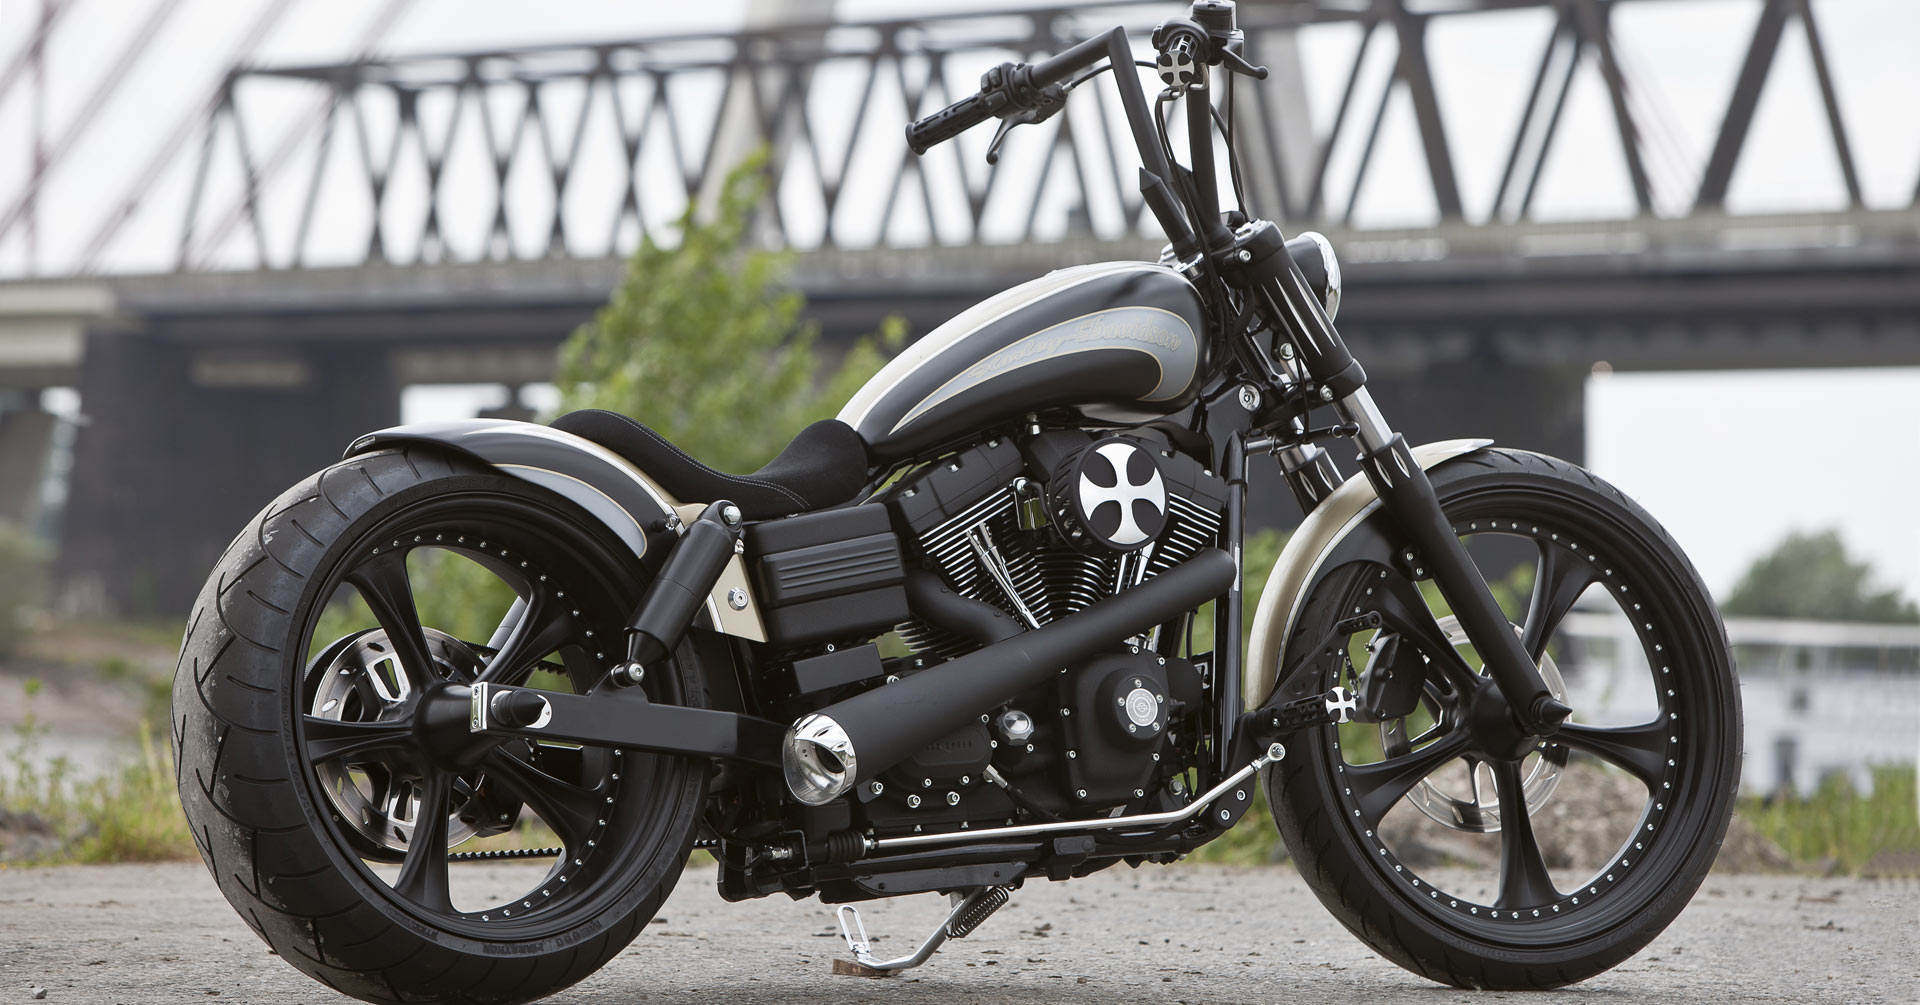 Customized Harley Davidson Dyna Models By Thunderbike